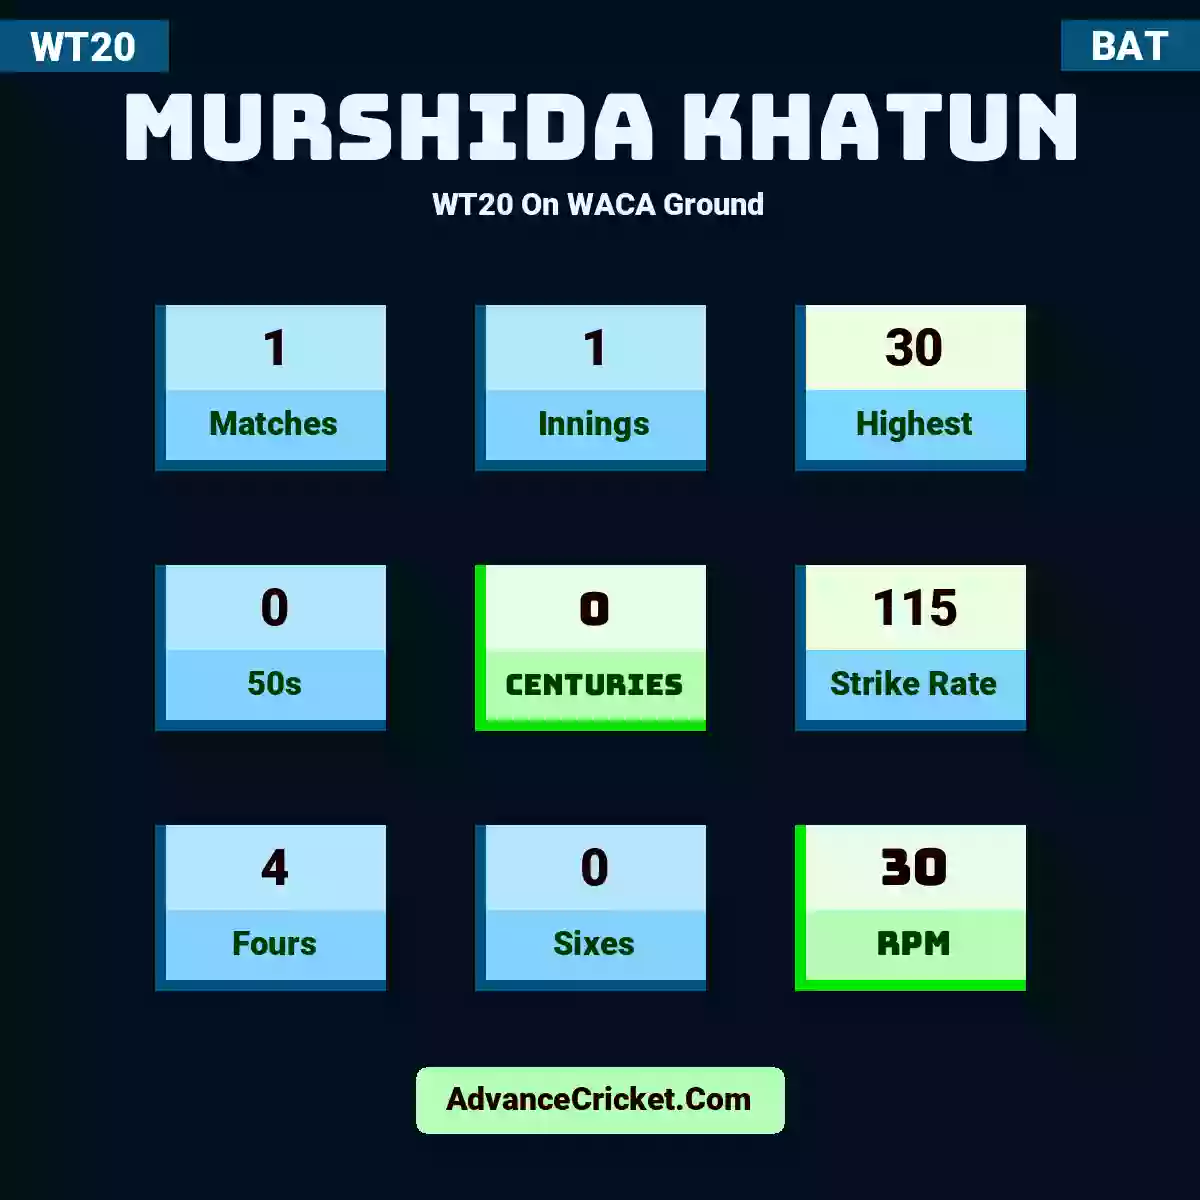 Murshida Khatun WT20  On WACA Ground, Murshida Khatun played 1 matches, scored 30 runs as highest, 0 half-centuries, and 0 centuries, with a strike rate of 115. M.Khatun hit 4 fours and 0 sixes, with an RPM of 30.